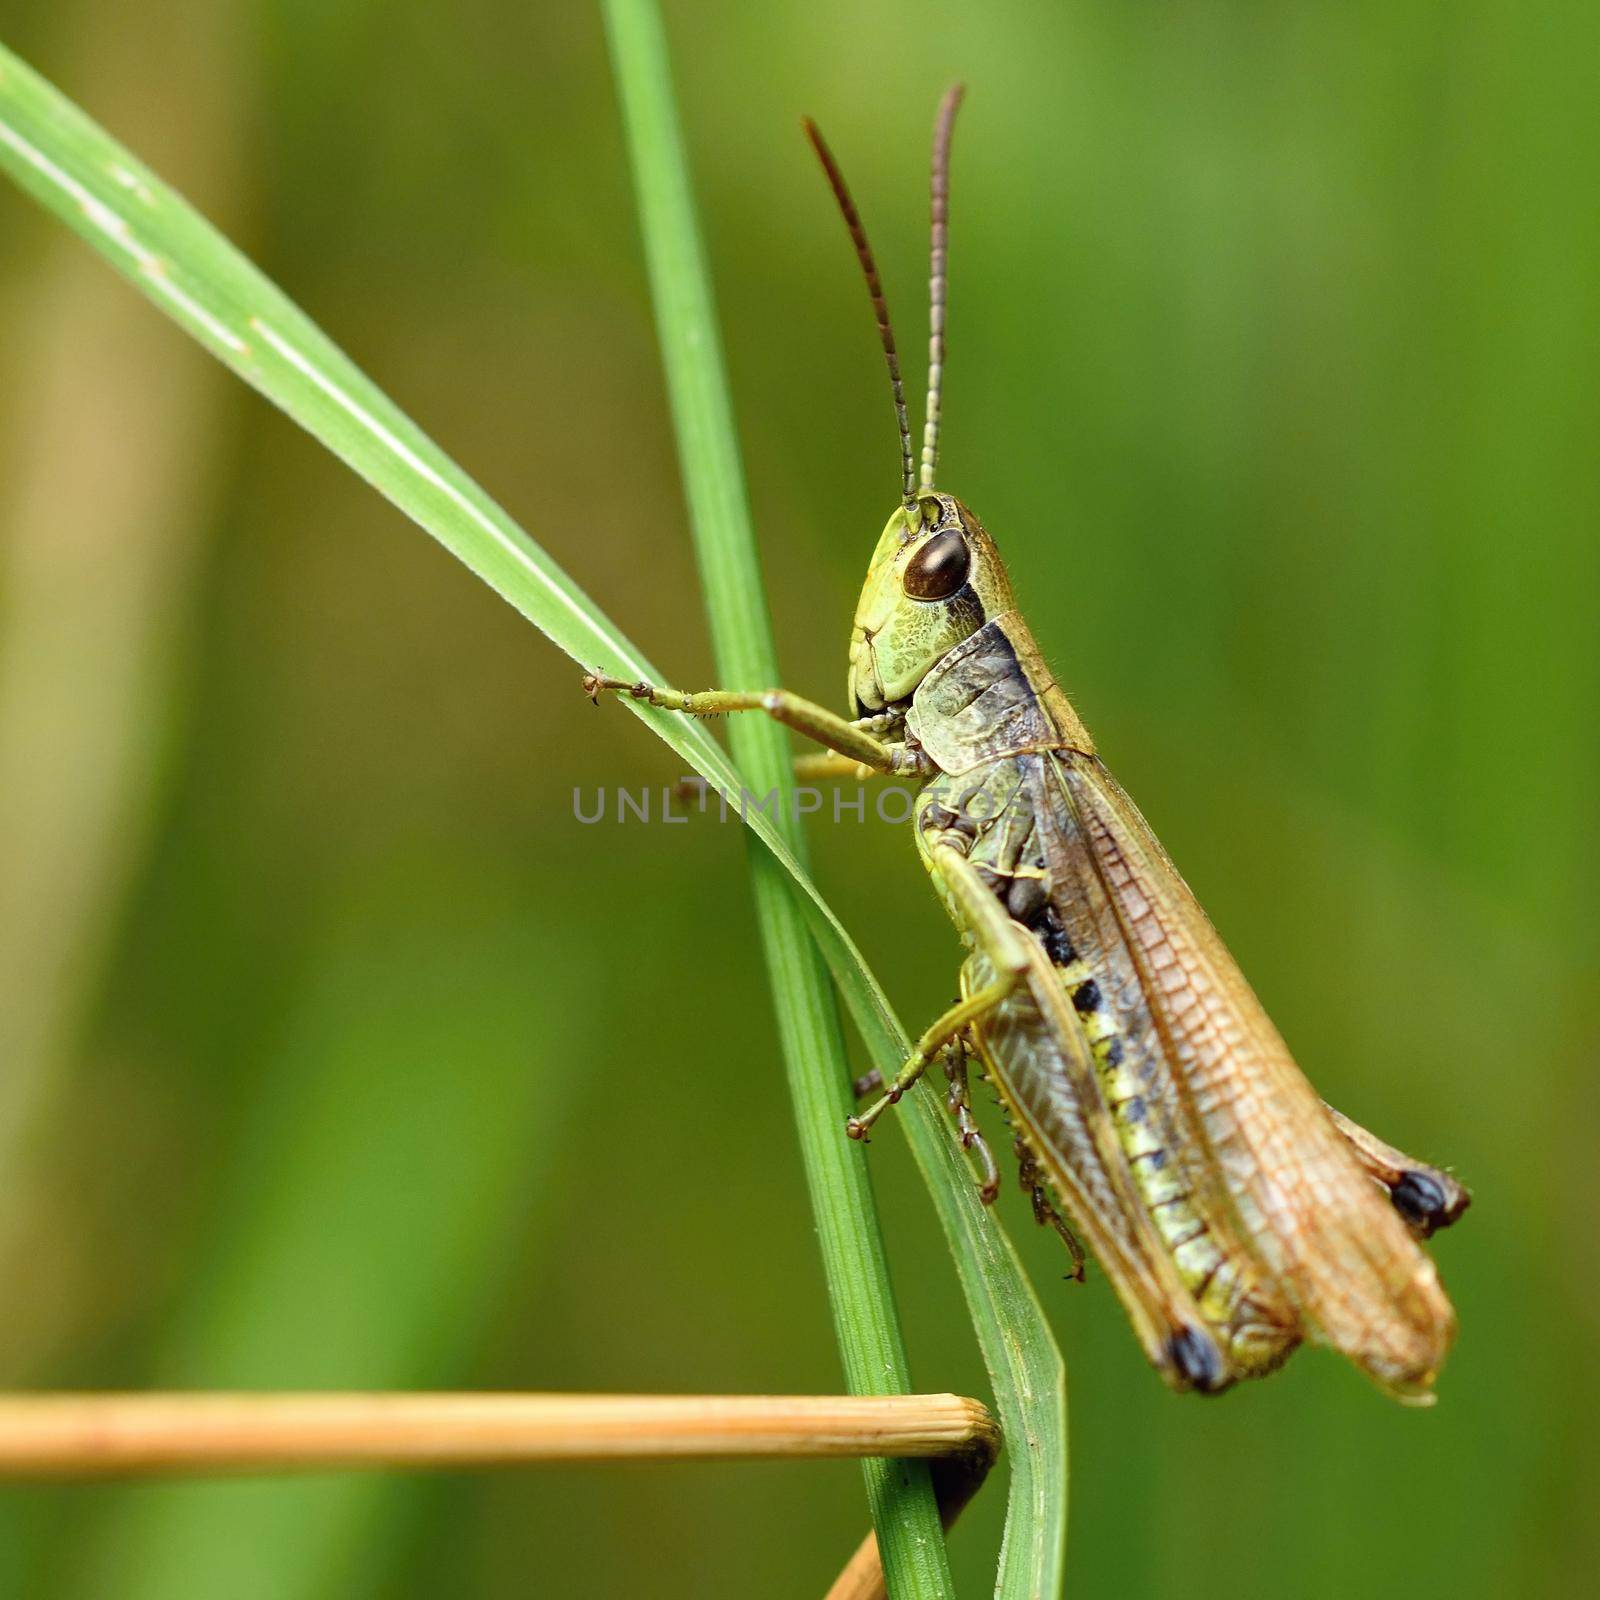 Beautiful macro shot of a grasshopper in the grass. Nature close up.